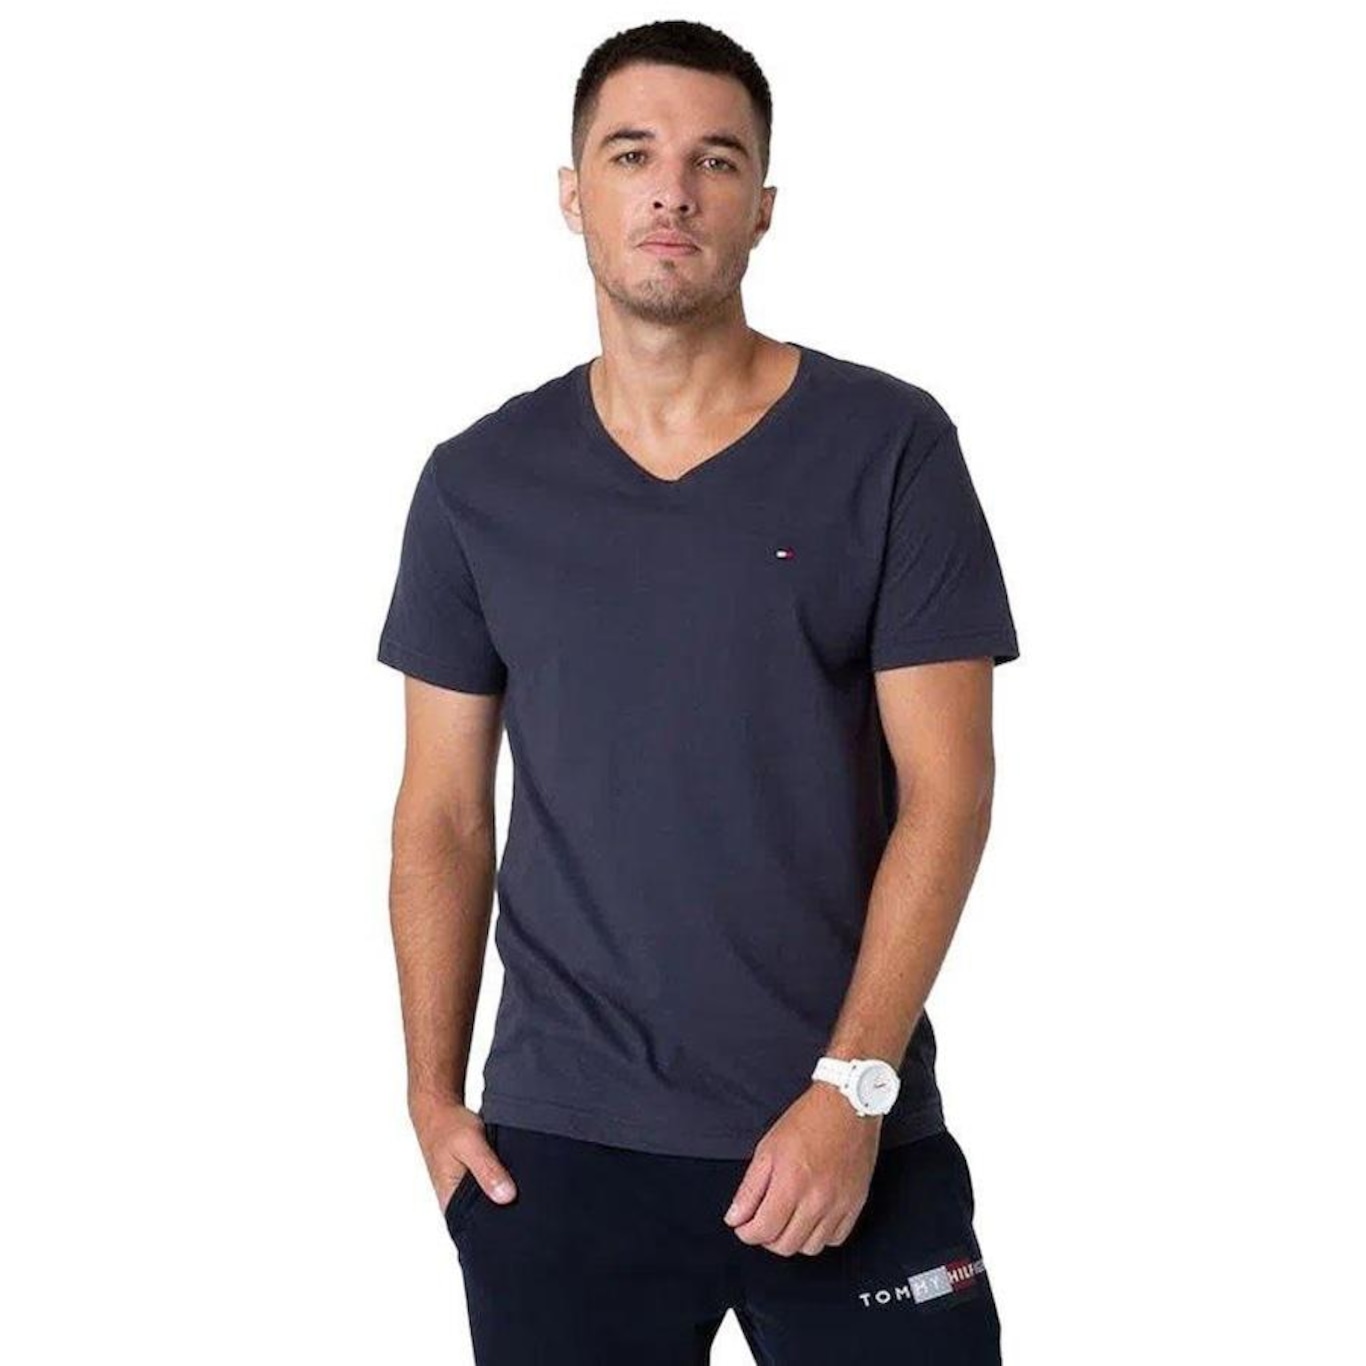 Camiseta Tommy Hilfiger Essential Vneck - Masculina em Promoção